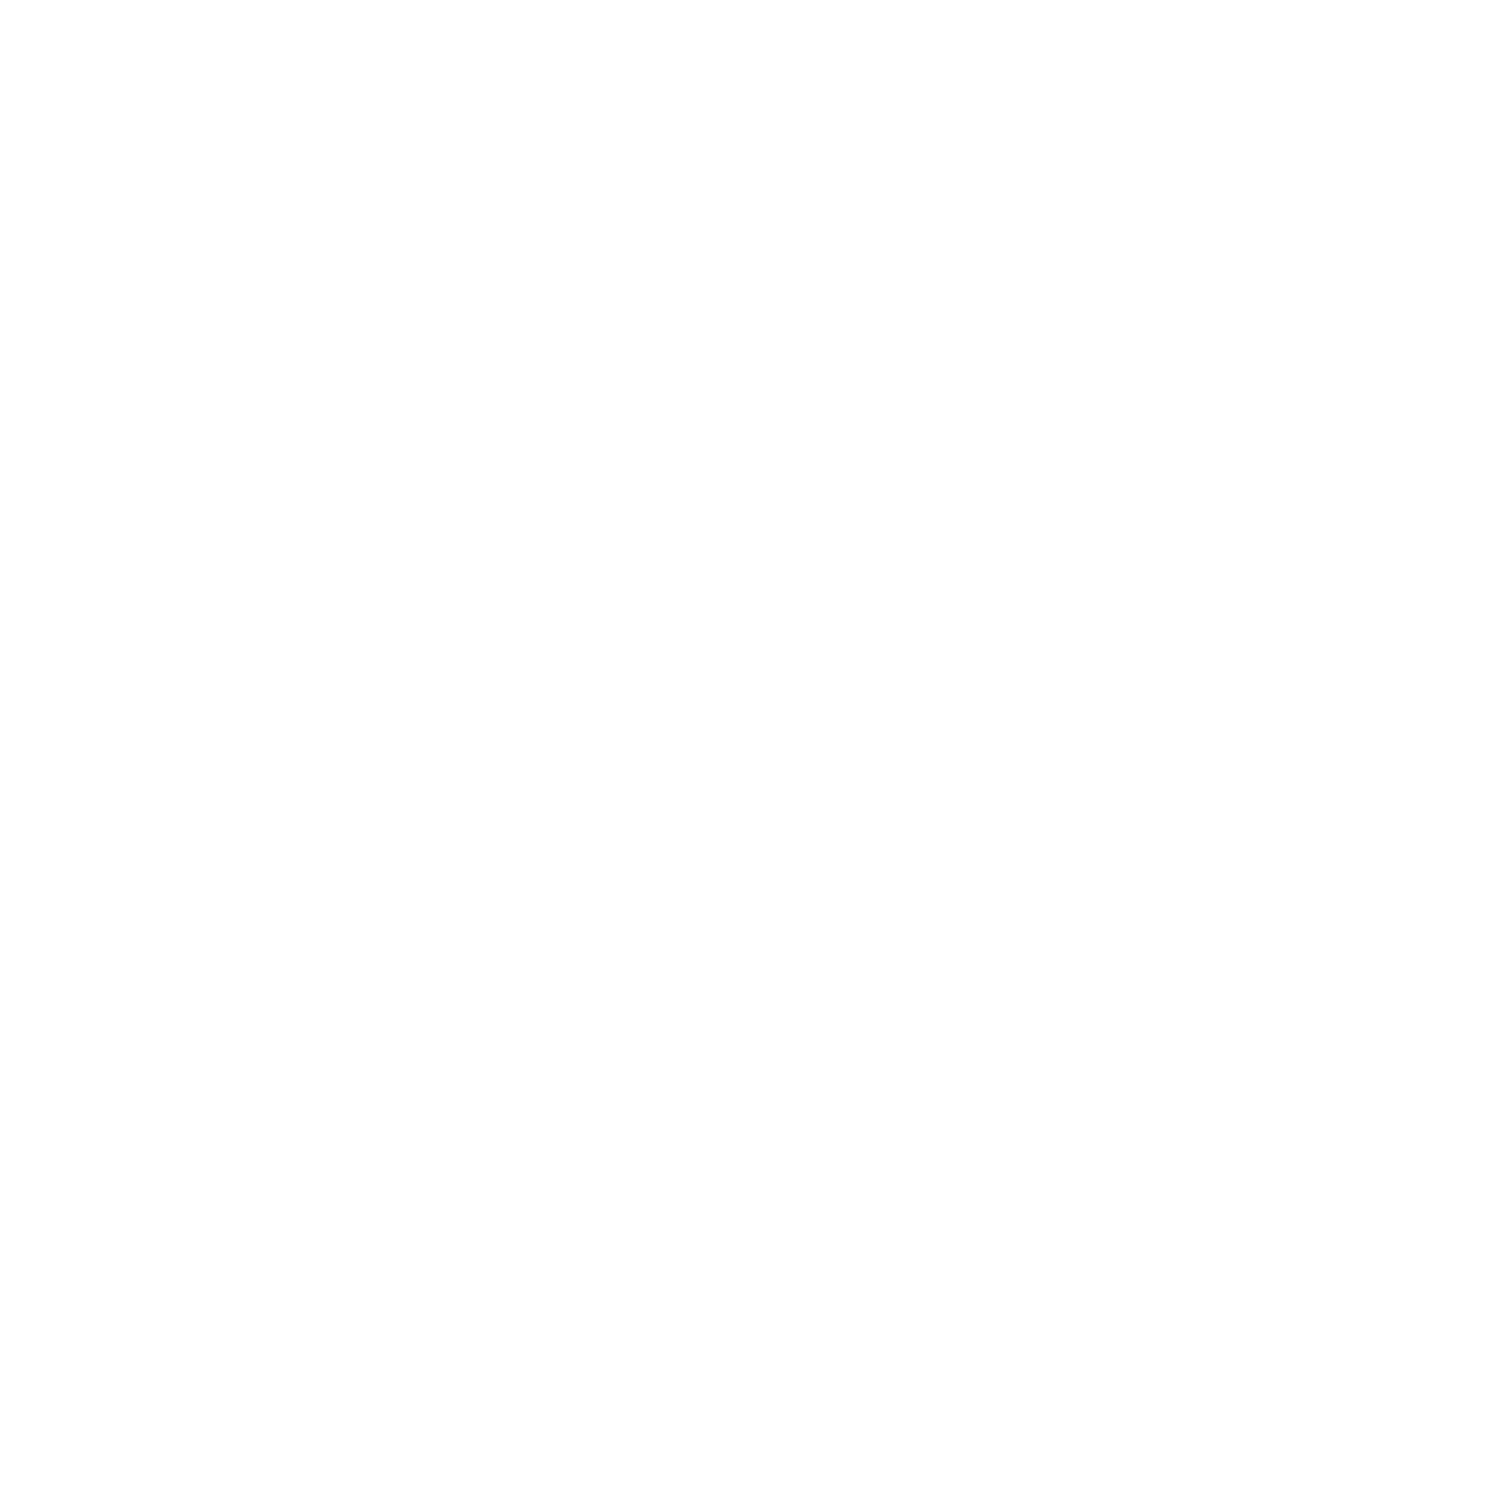 CSI lab